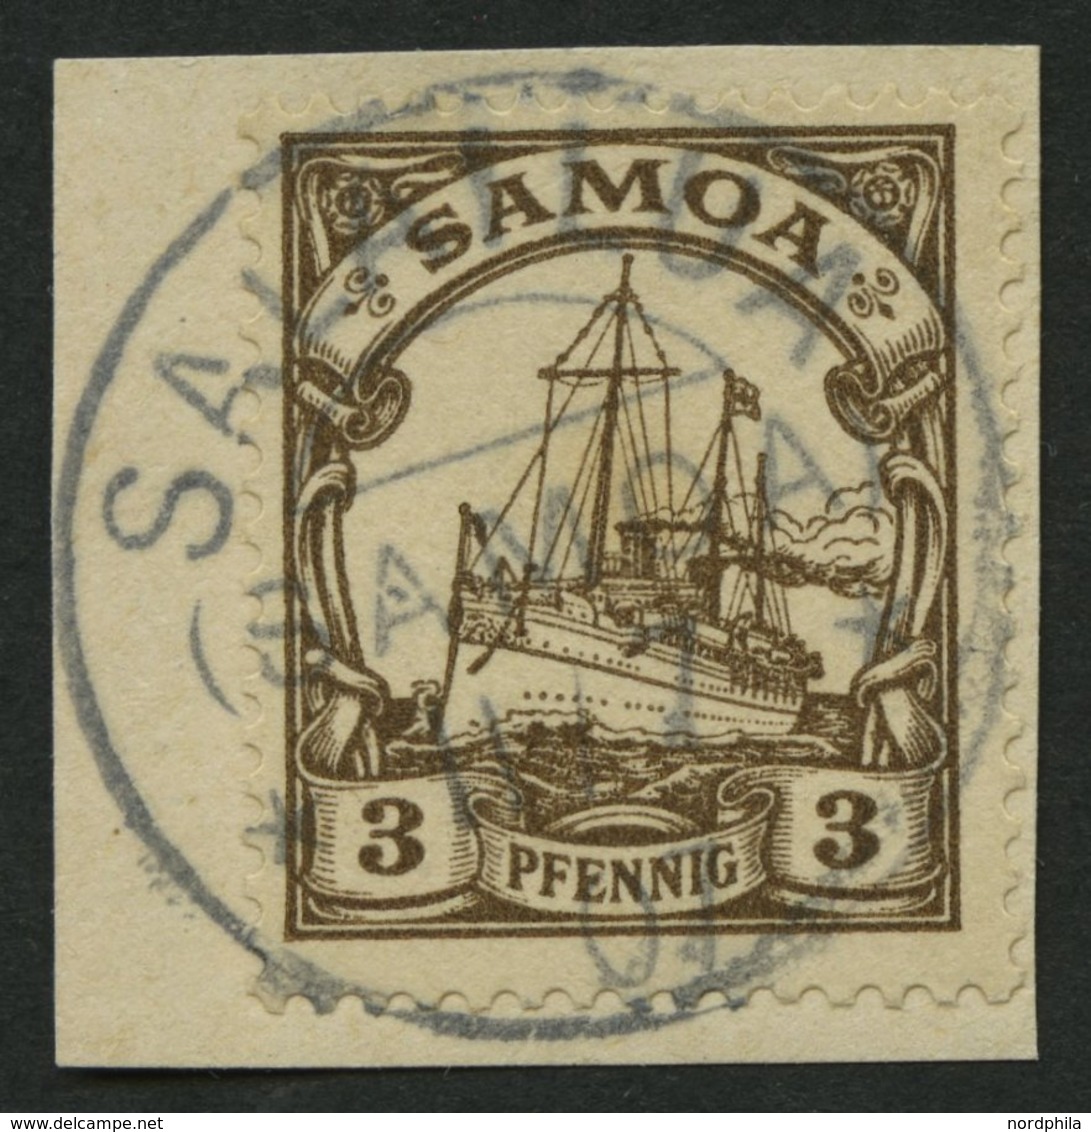 SAMOA 7 BrfStk, 1900, 3 Pf. Dunkelockerbraun, Ohne Wz., Stempel SALAILUA, Prachtbriefstück - Samoa